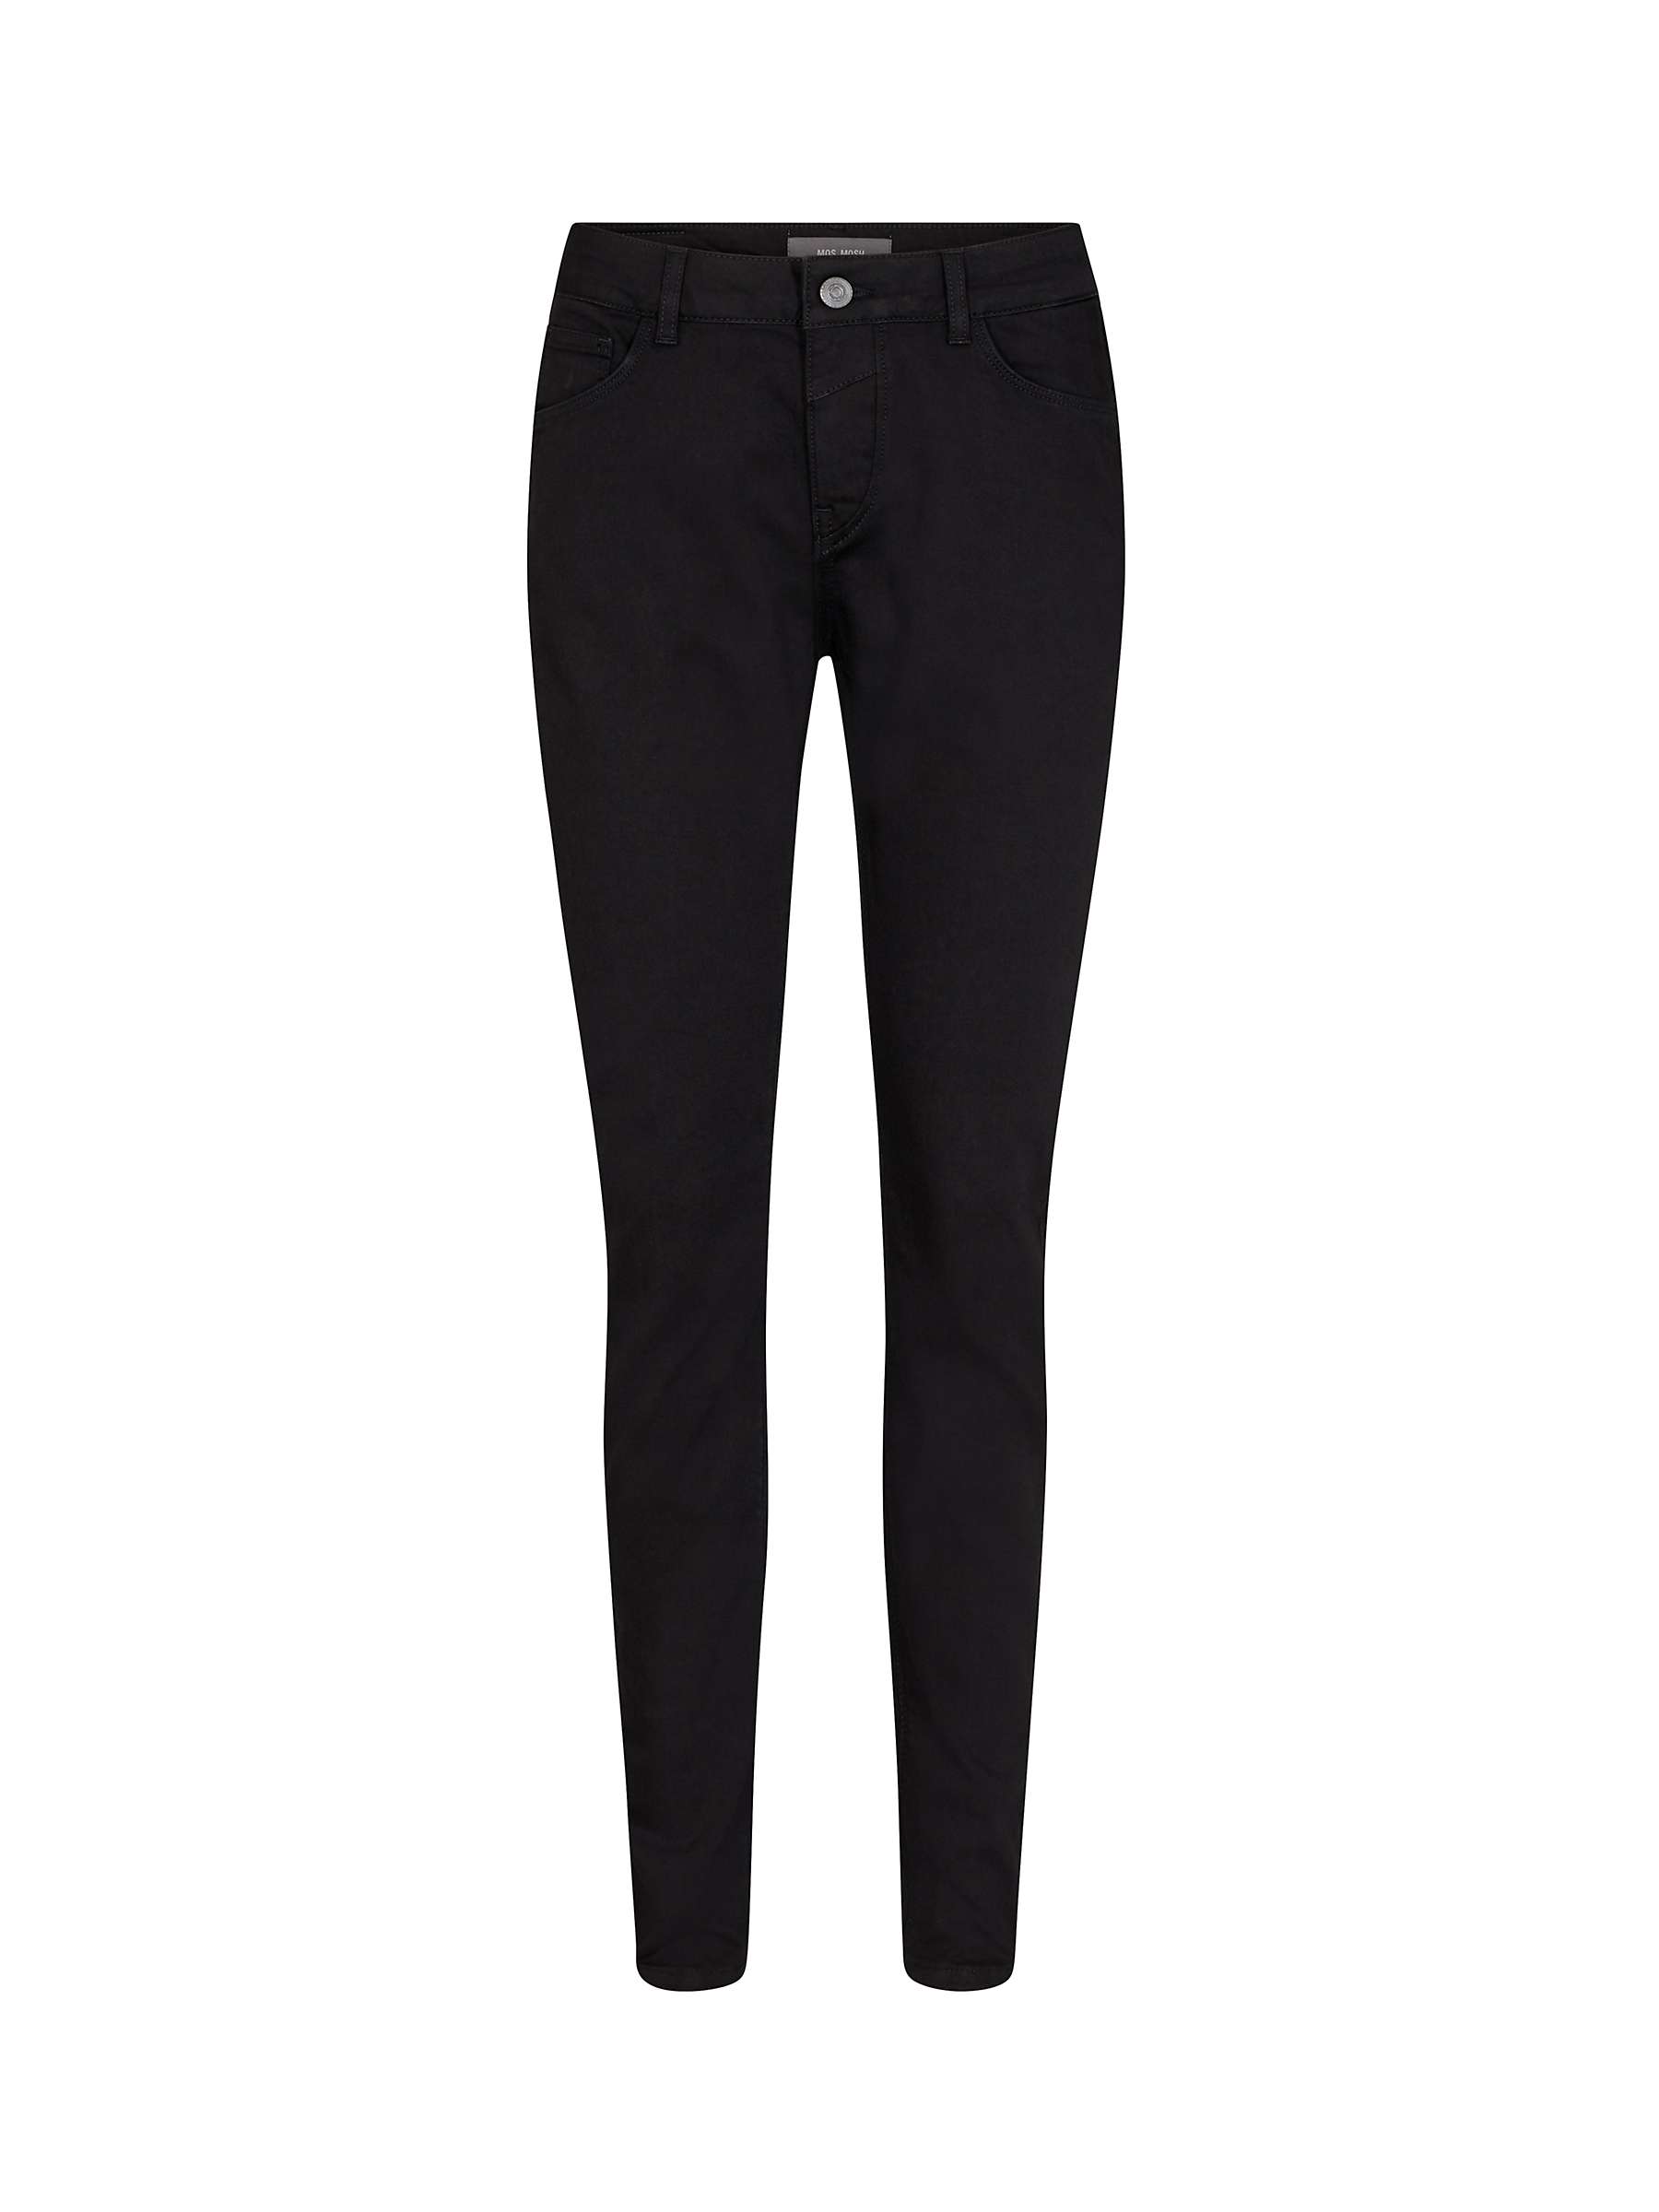 Buy MOS MOSH Naomi Cover Jeans, Black Online at johnlewis.com